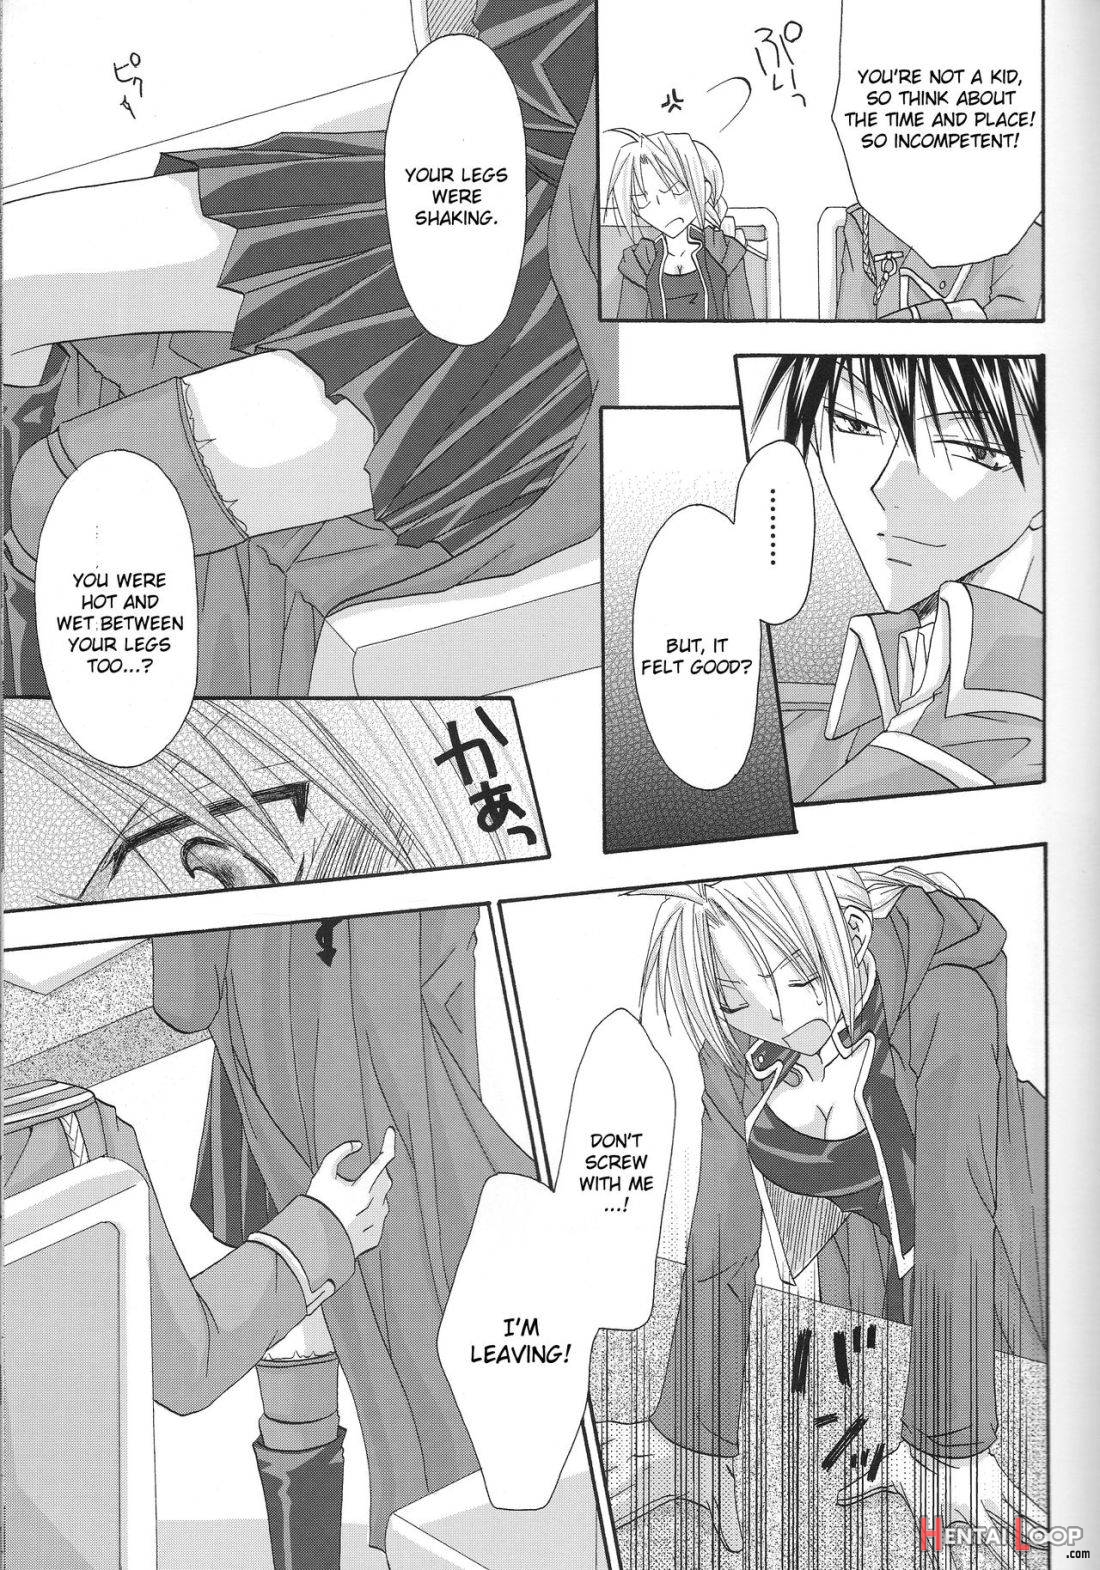 Sex(f) page 8